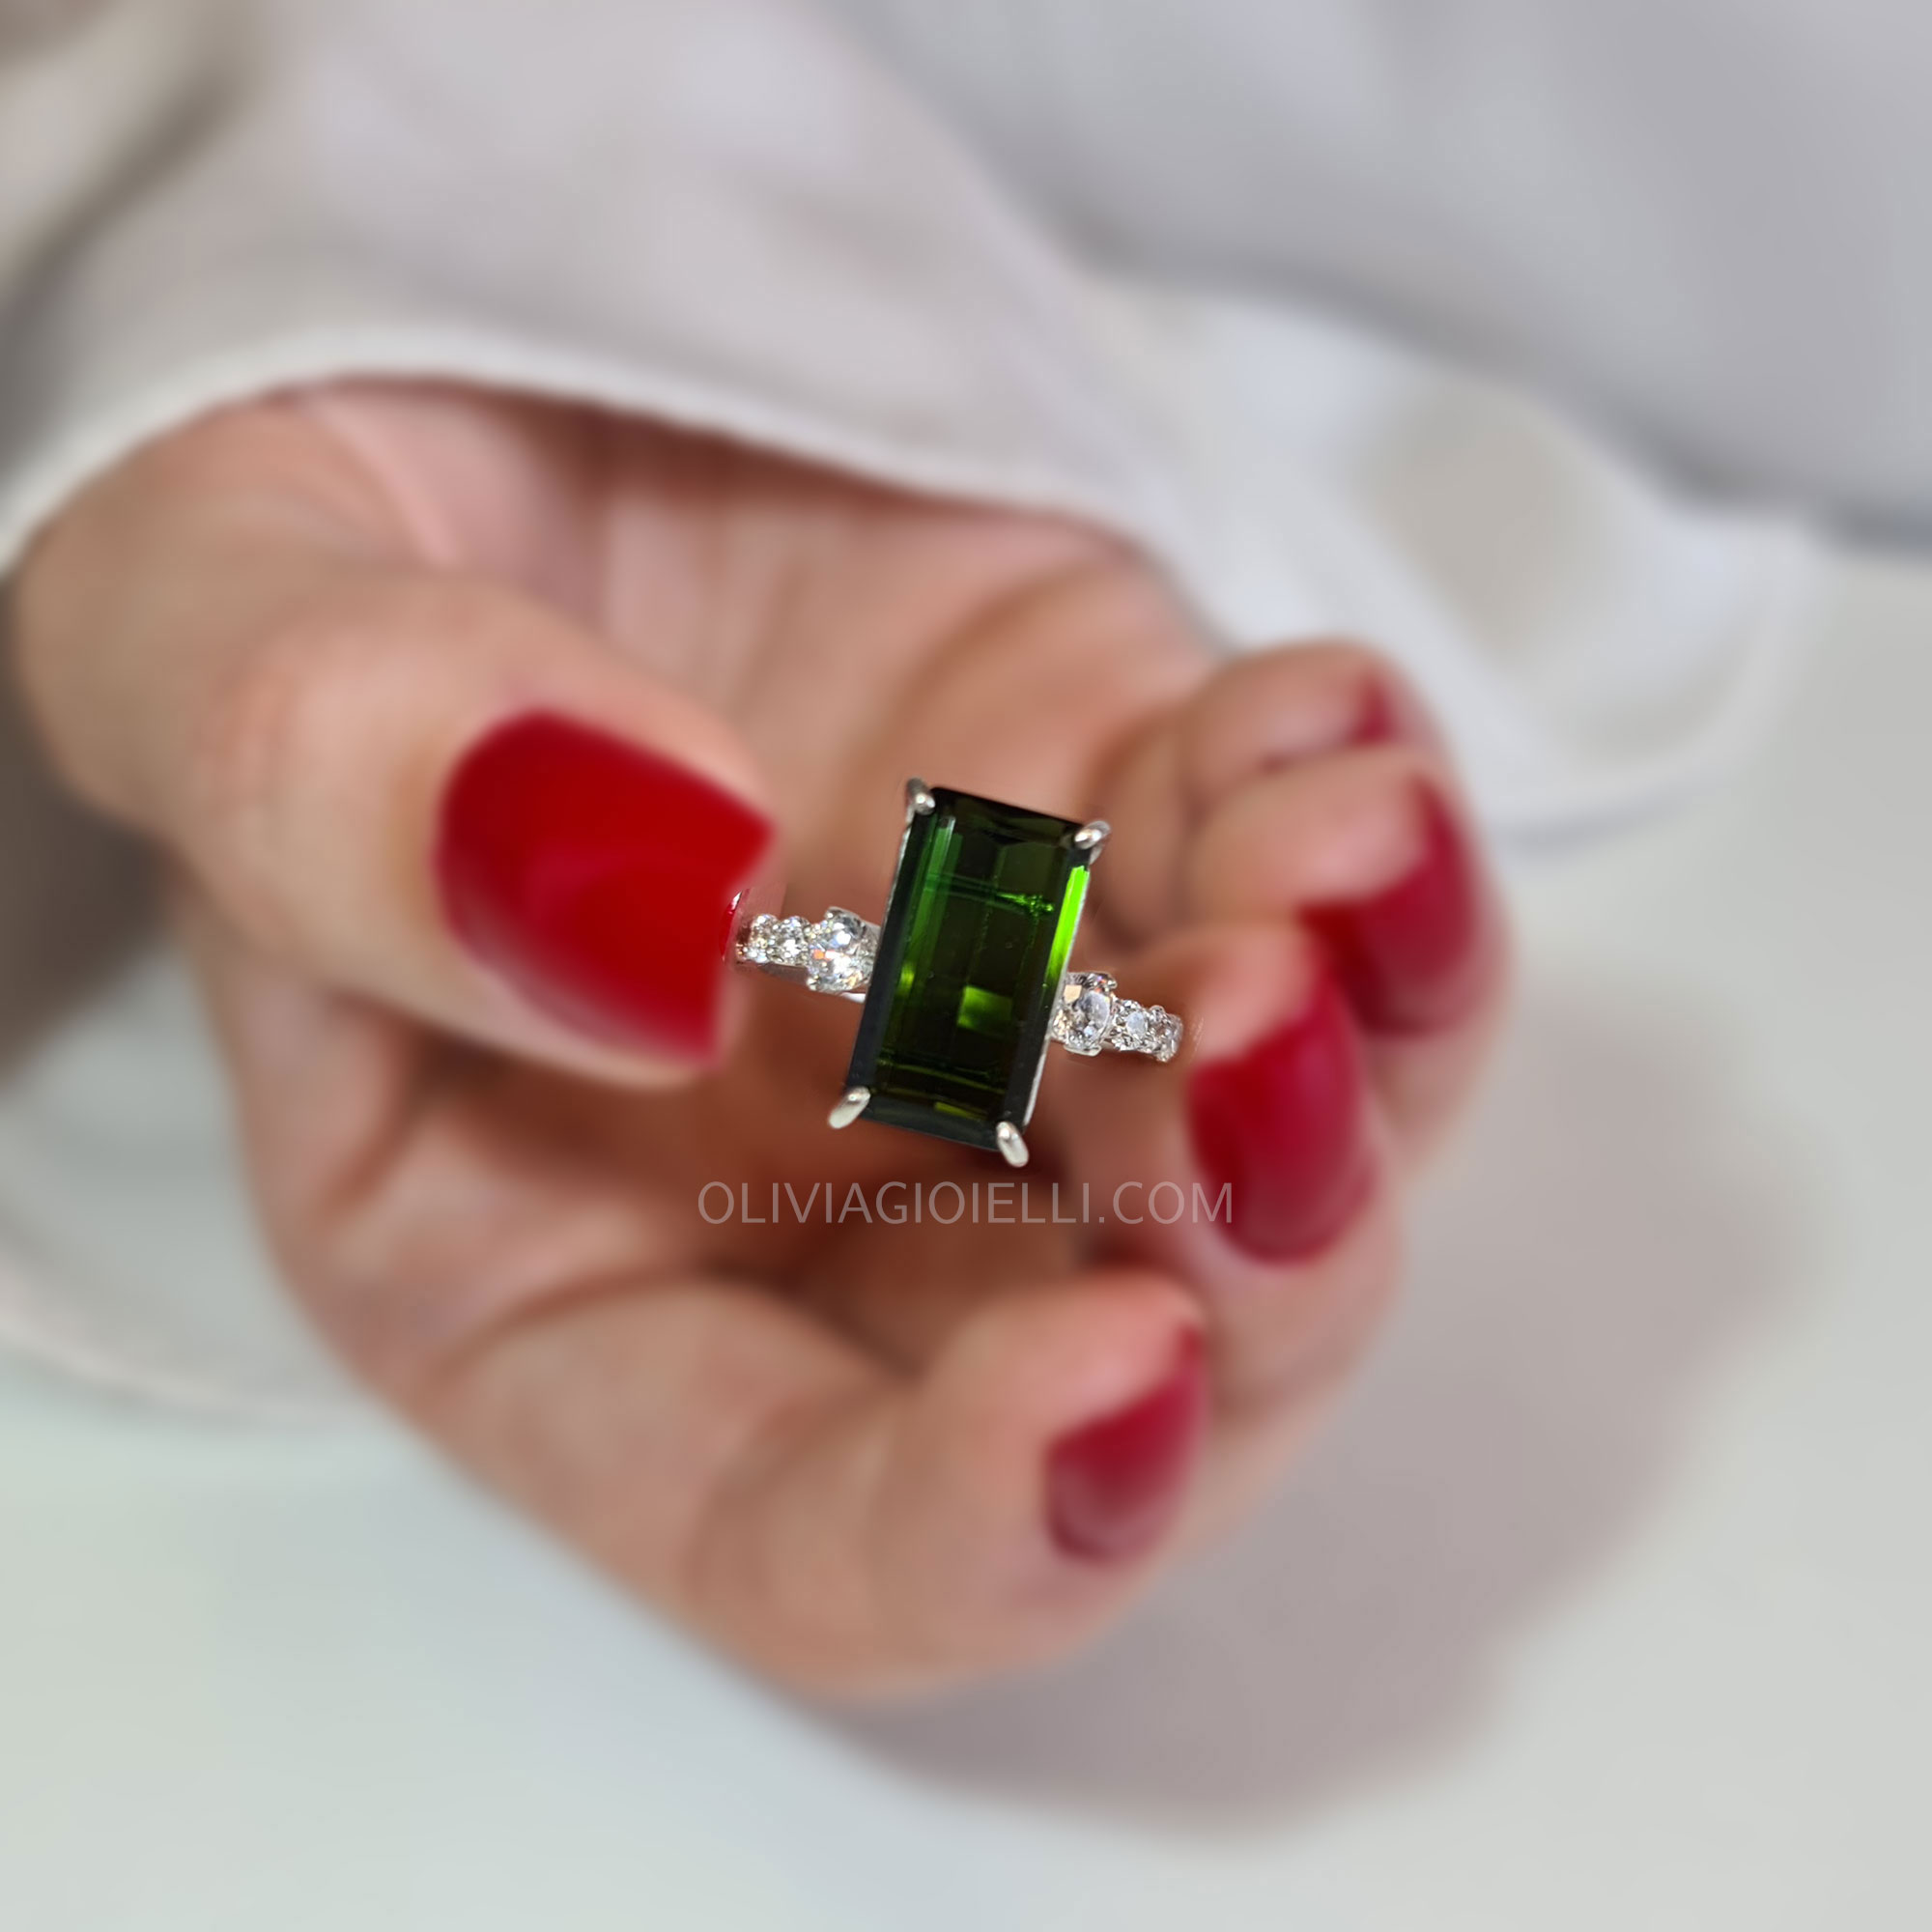 Natural Green Tourmaline & Diamonds Ring in 18k Gold - Fiorella